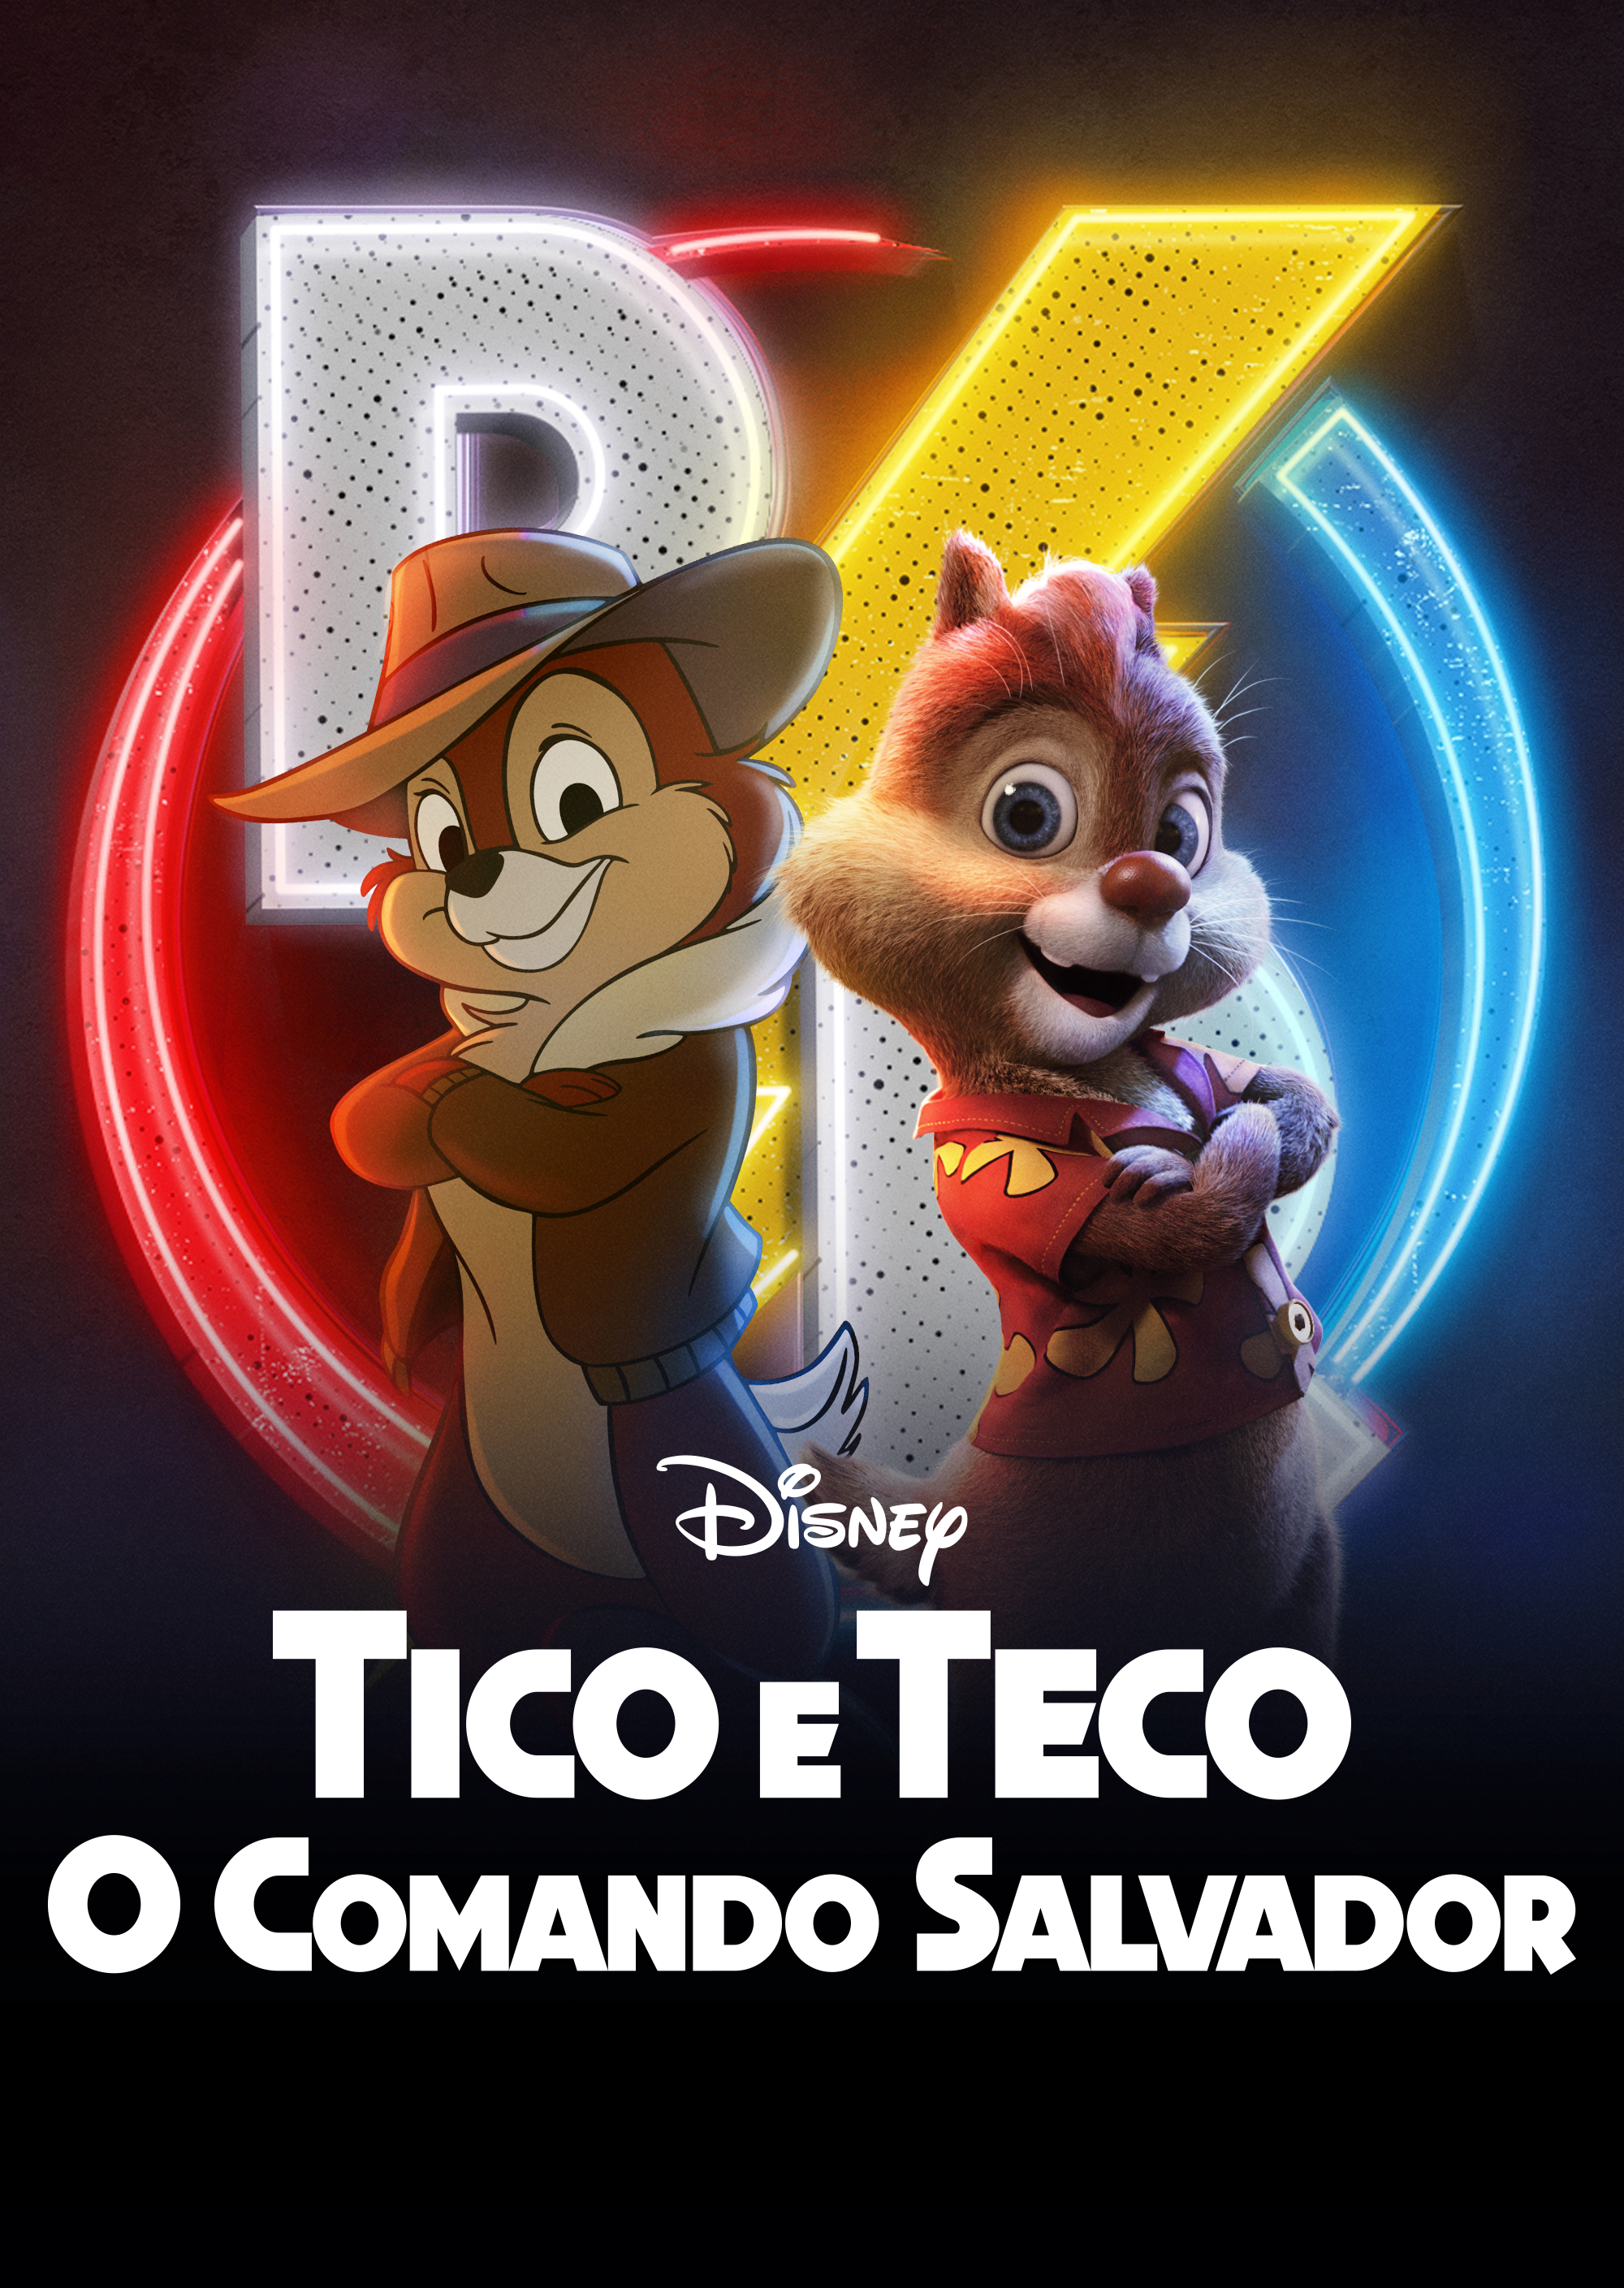 Tico e Teco, Disney Wiki